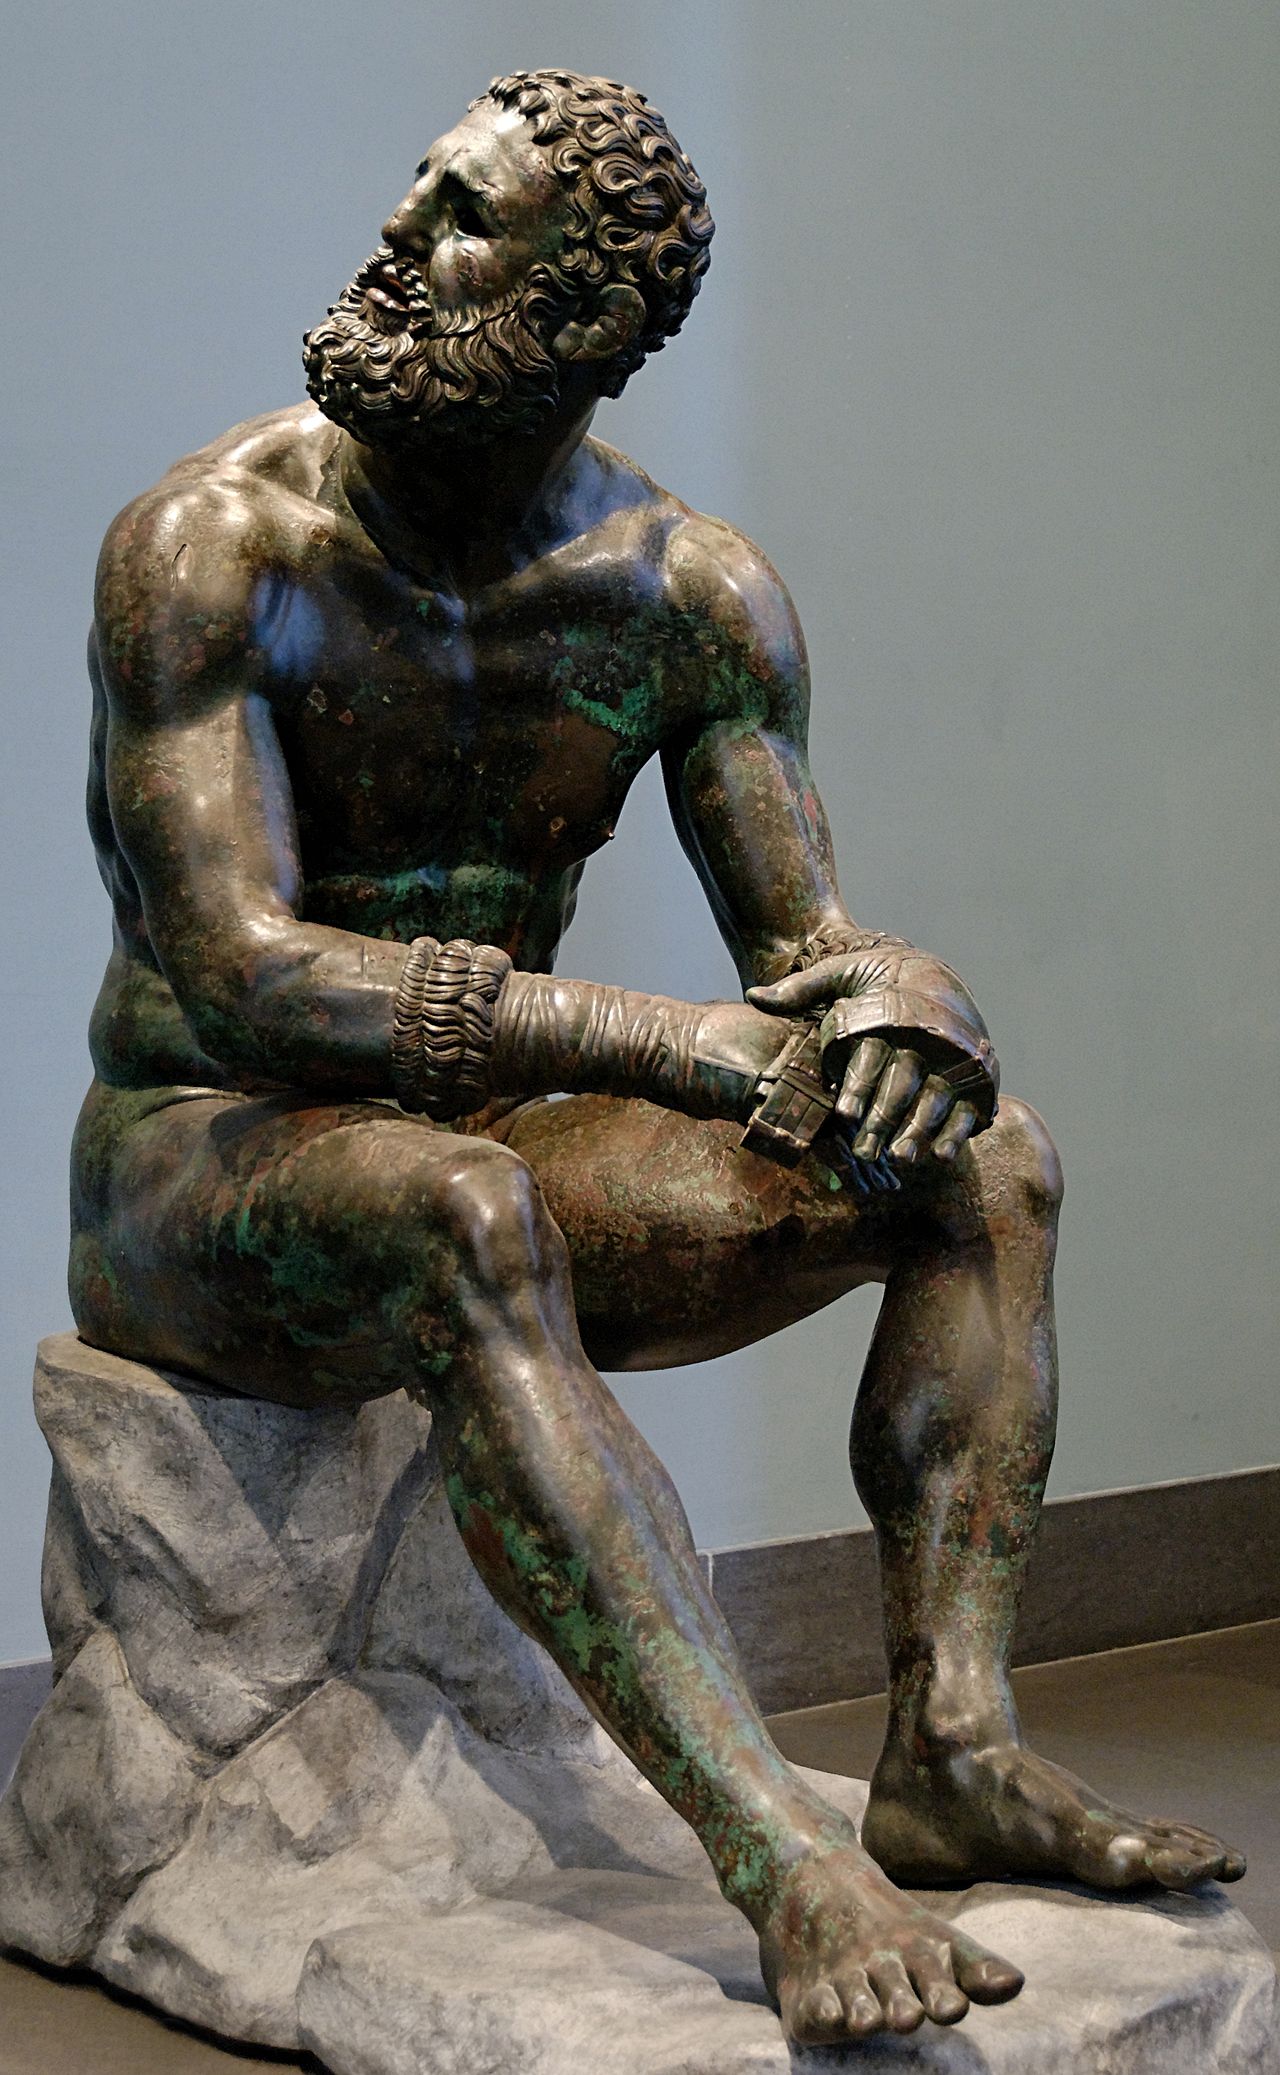 https://upload.wikimedia.org/wikipedia/commons/thumb/b/bb/Thermae_boxer_Massimo_Inv1055.jpg/1280px-Thermae_boxer_Massimo_Inv1055.jpg